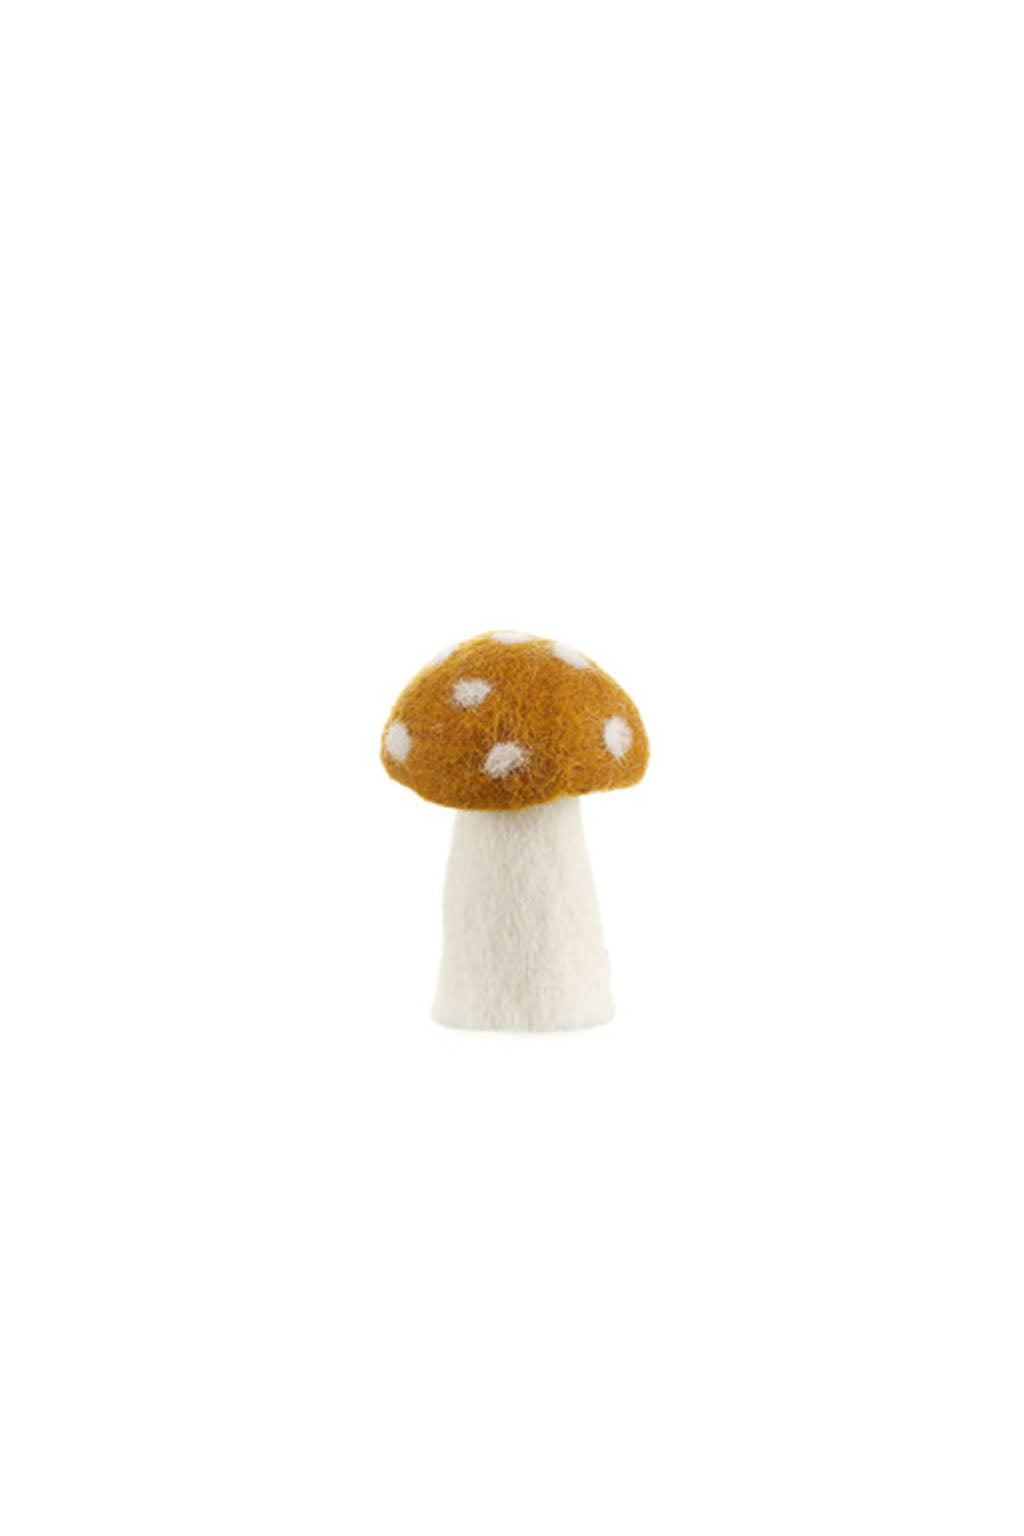 Dotty Mushroom - Small 8cm